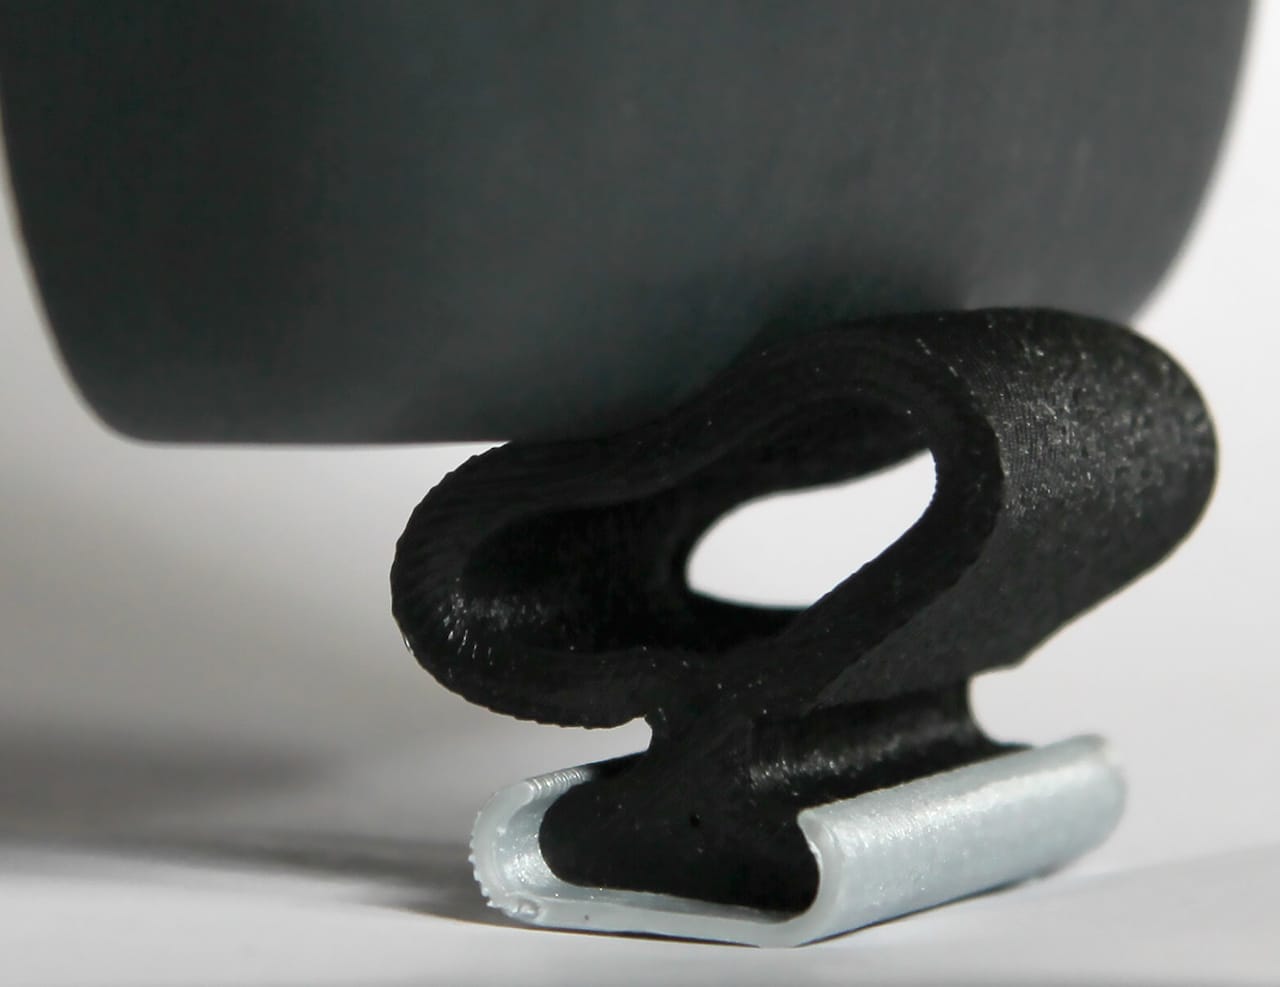  Verbatim's new PRIMALLOY BLACK, a flexible thermoplastic for 3D printing 